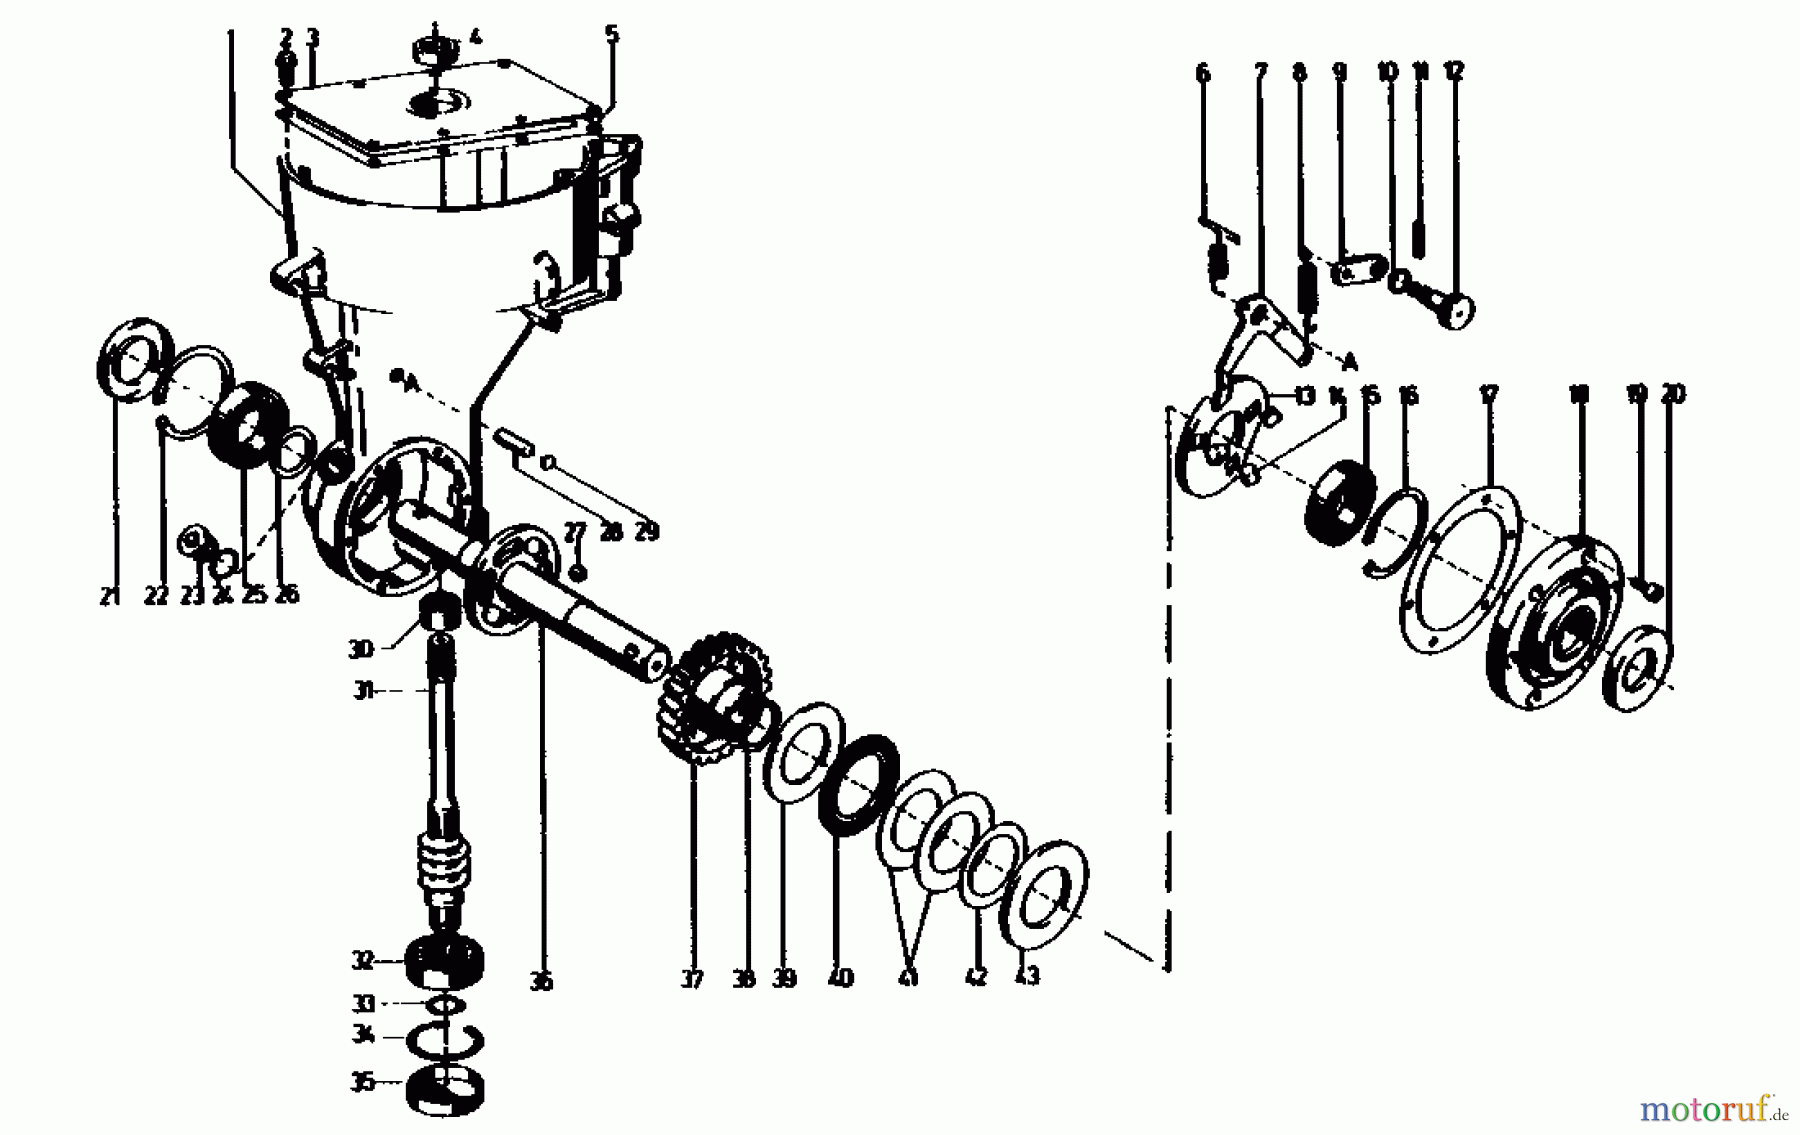  Gutbrod Motorhacken MB 65-35 07516.01  (1990) Getriebe